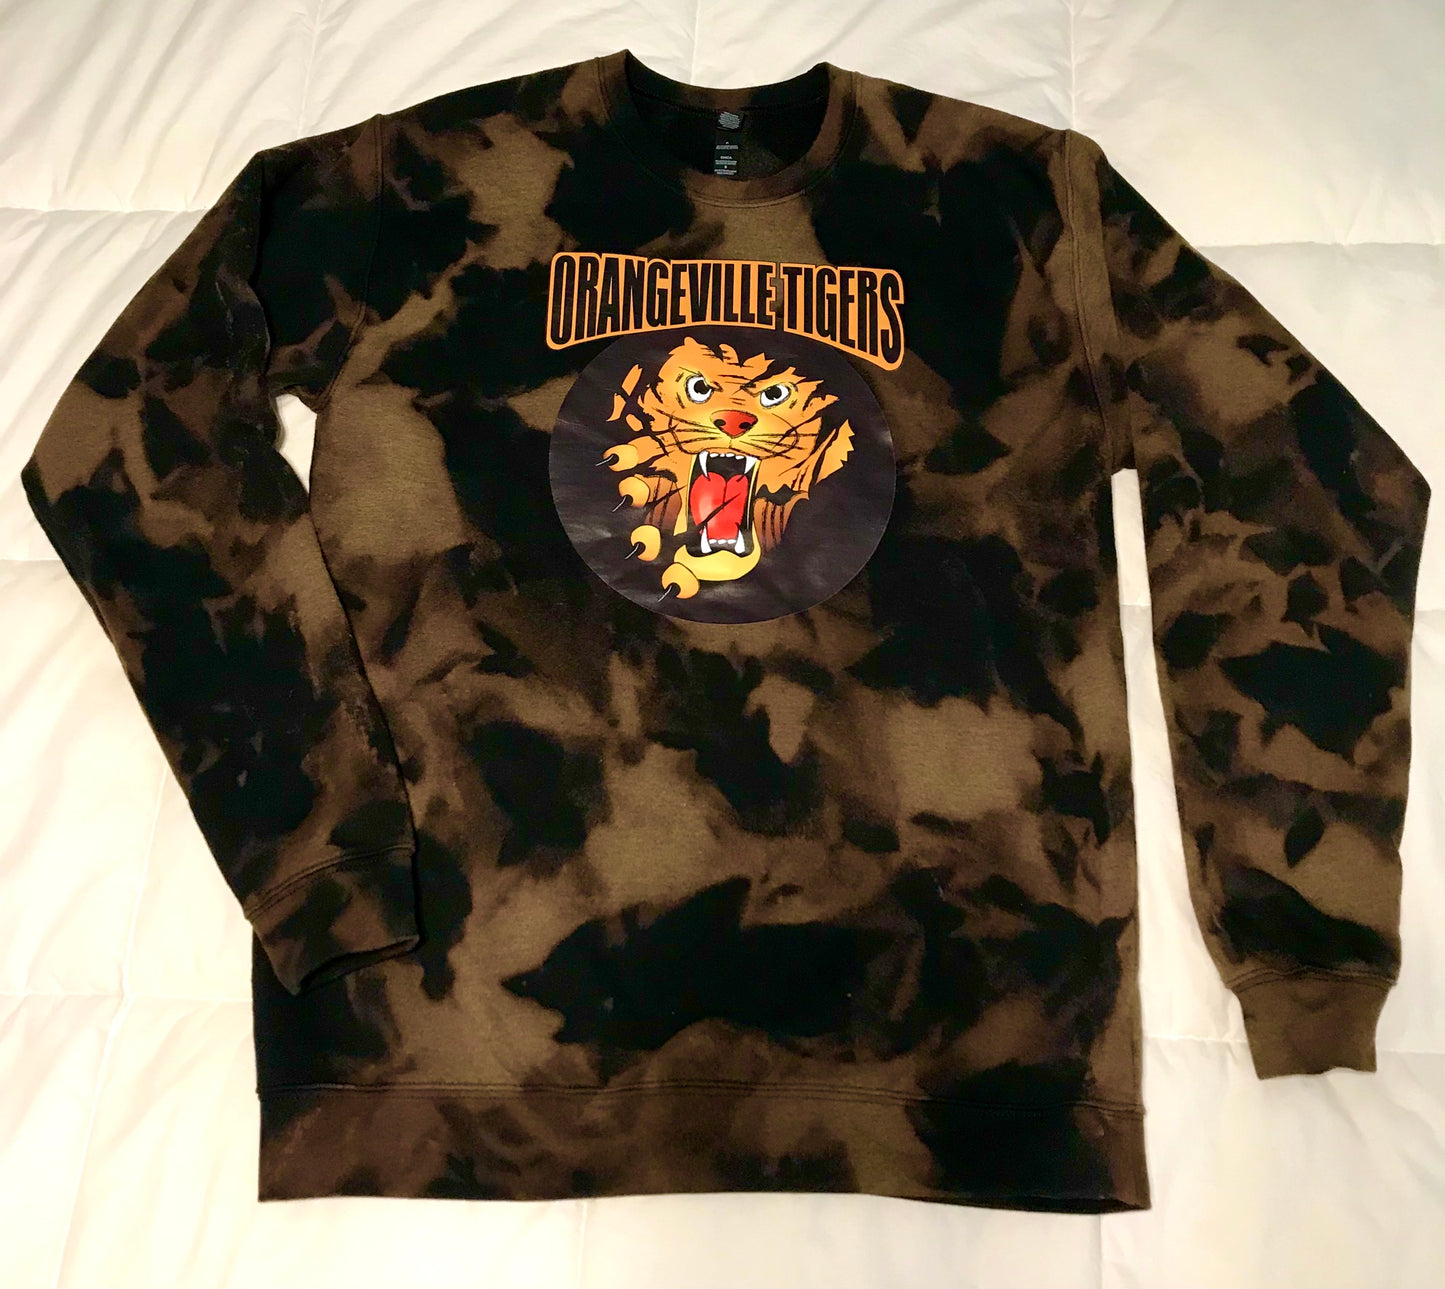 Orangeville tigers hockey - Tie Dye sweatshirts